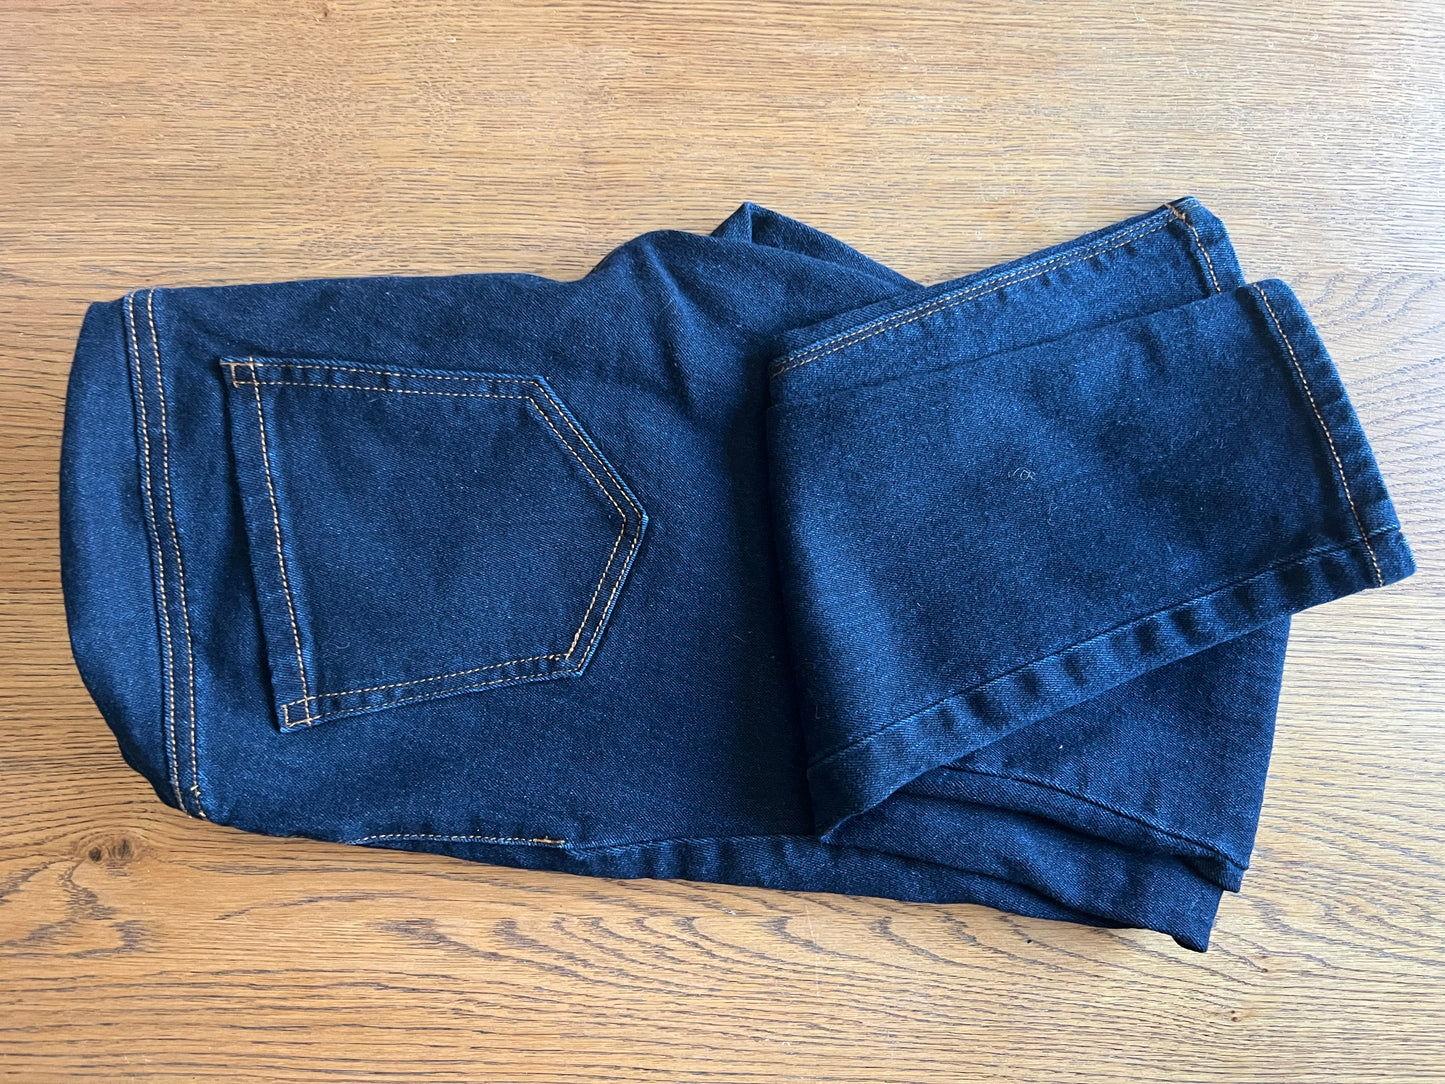 Indigo Blue full panel maternity jeans size Petite